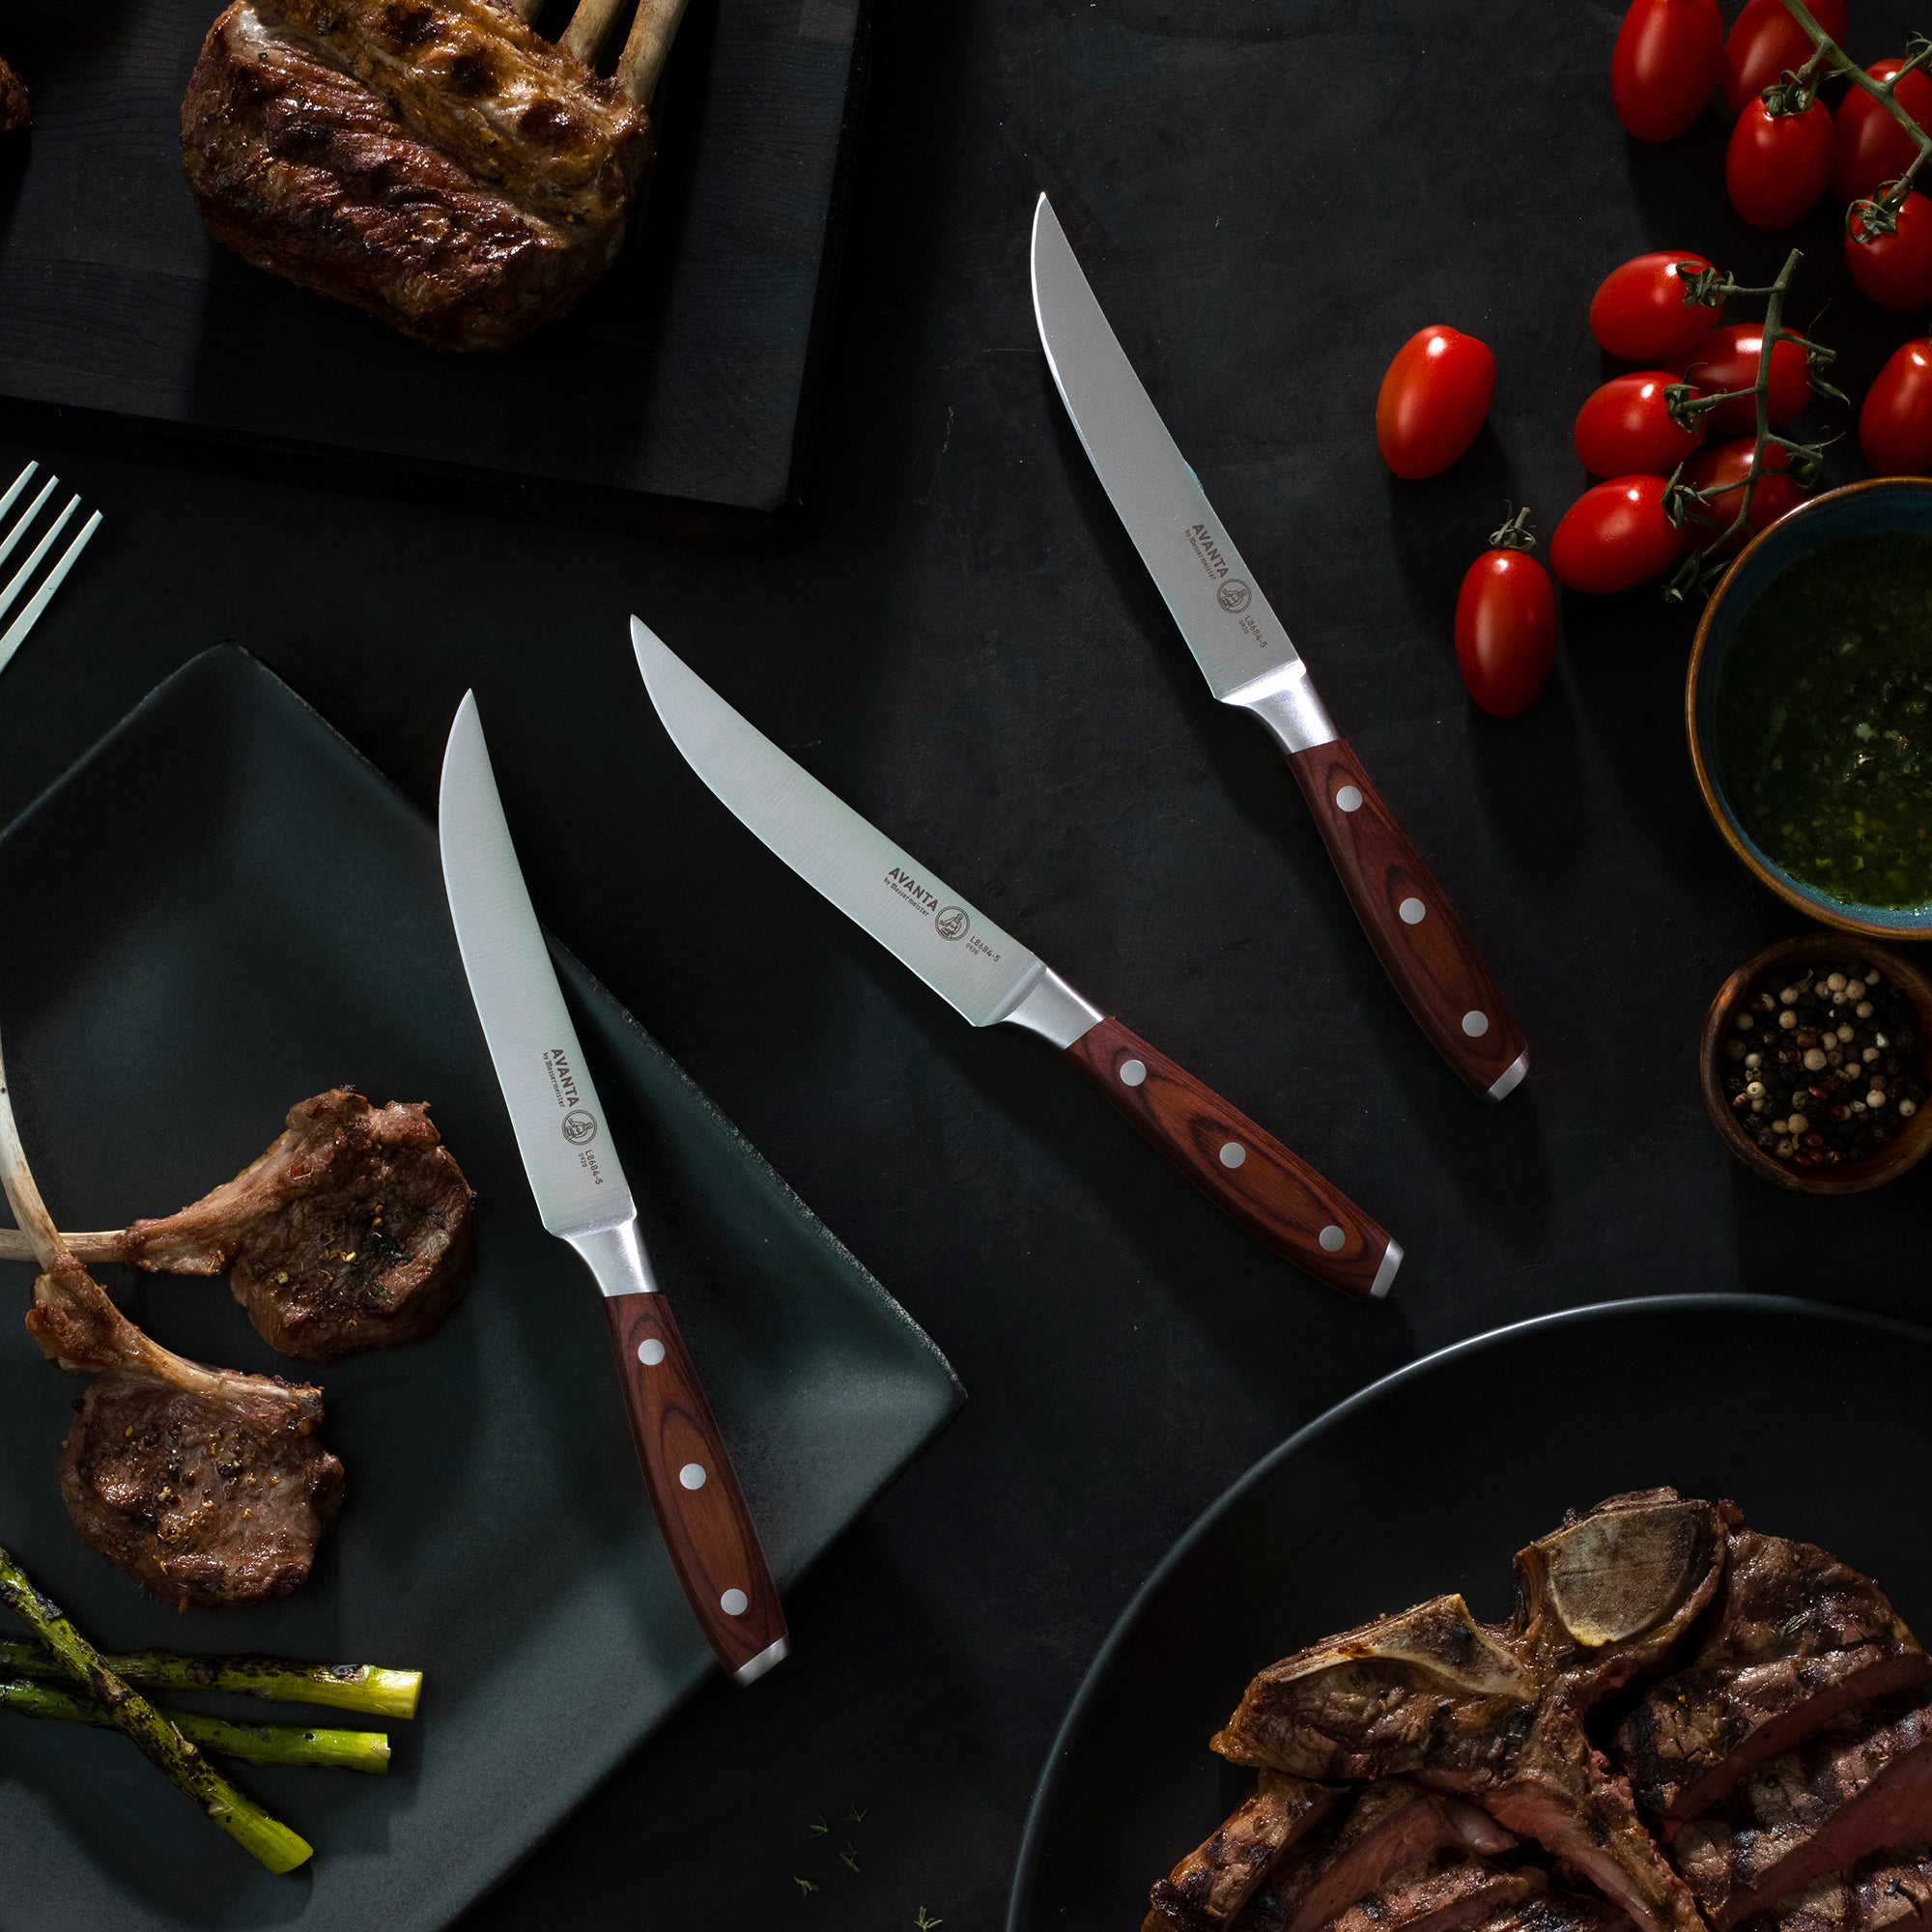  Messermeister Avanta 5” Fine Edge Steak Knife Set - German X50  Stainless Steel - Rust Resistant & Easy to Maintain - Includes 4 Steak  Knives: Home & Kitchen